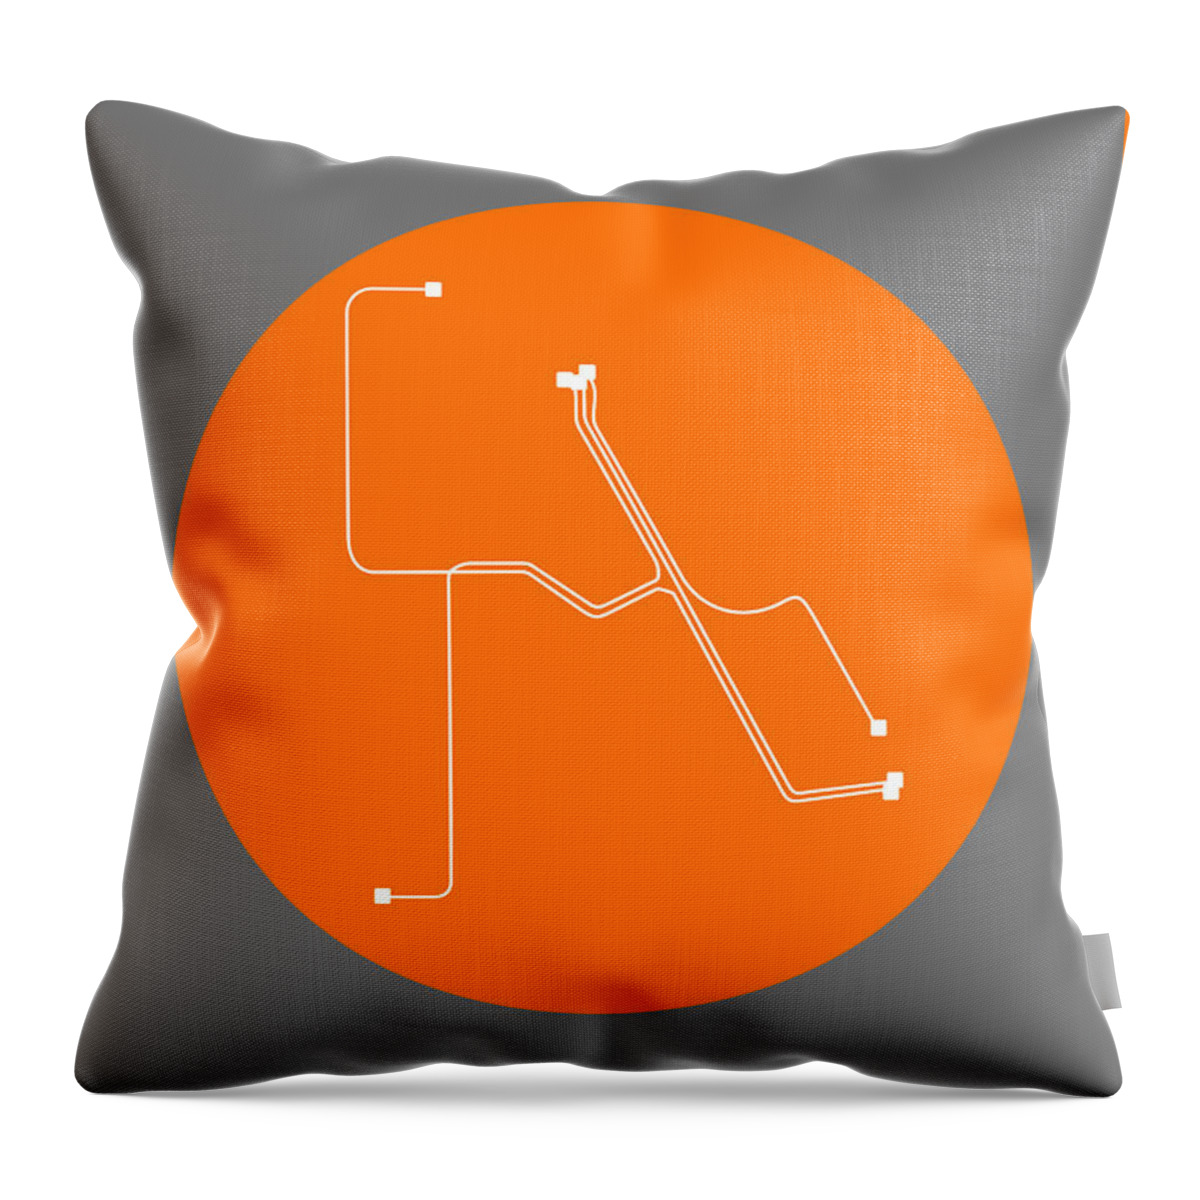 Amsterdam Throw Pillow featuring the digital art Amsterdam Orange Subway Map by Naxart Studio